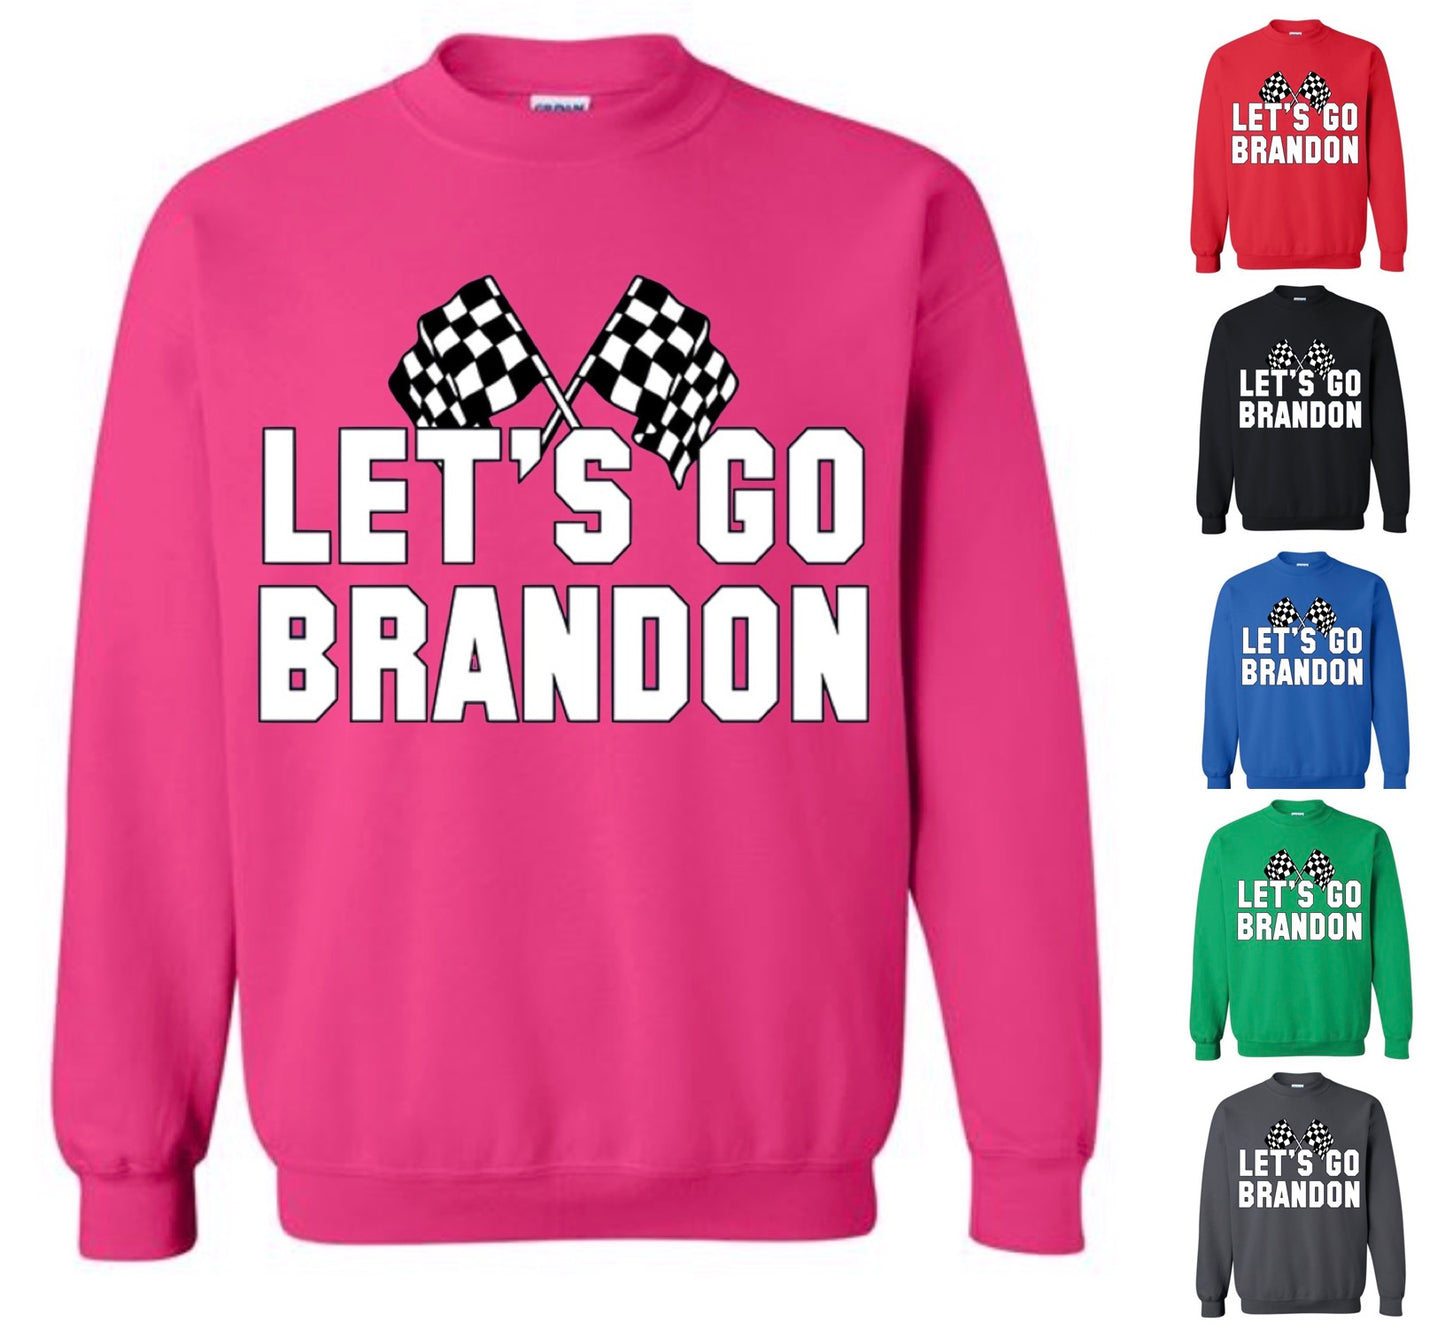 Let's Go Brandon Sweatshirt